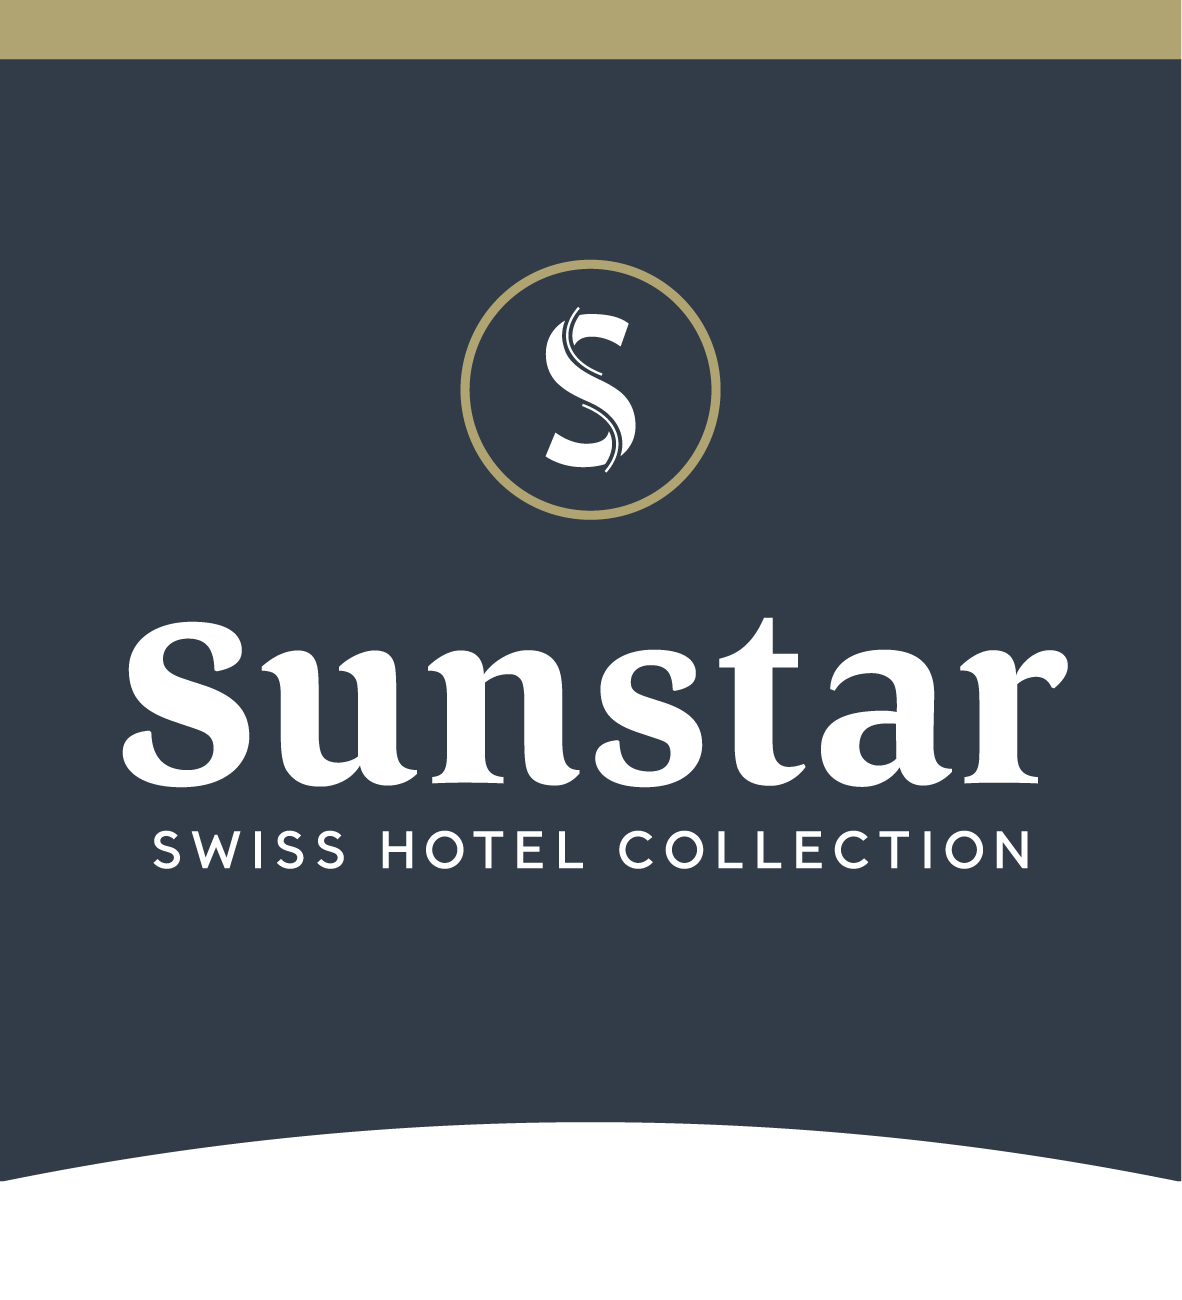 Sunstar Swiss hotel collection